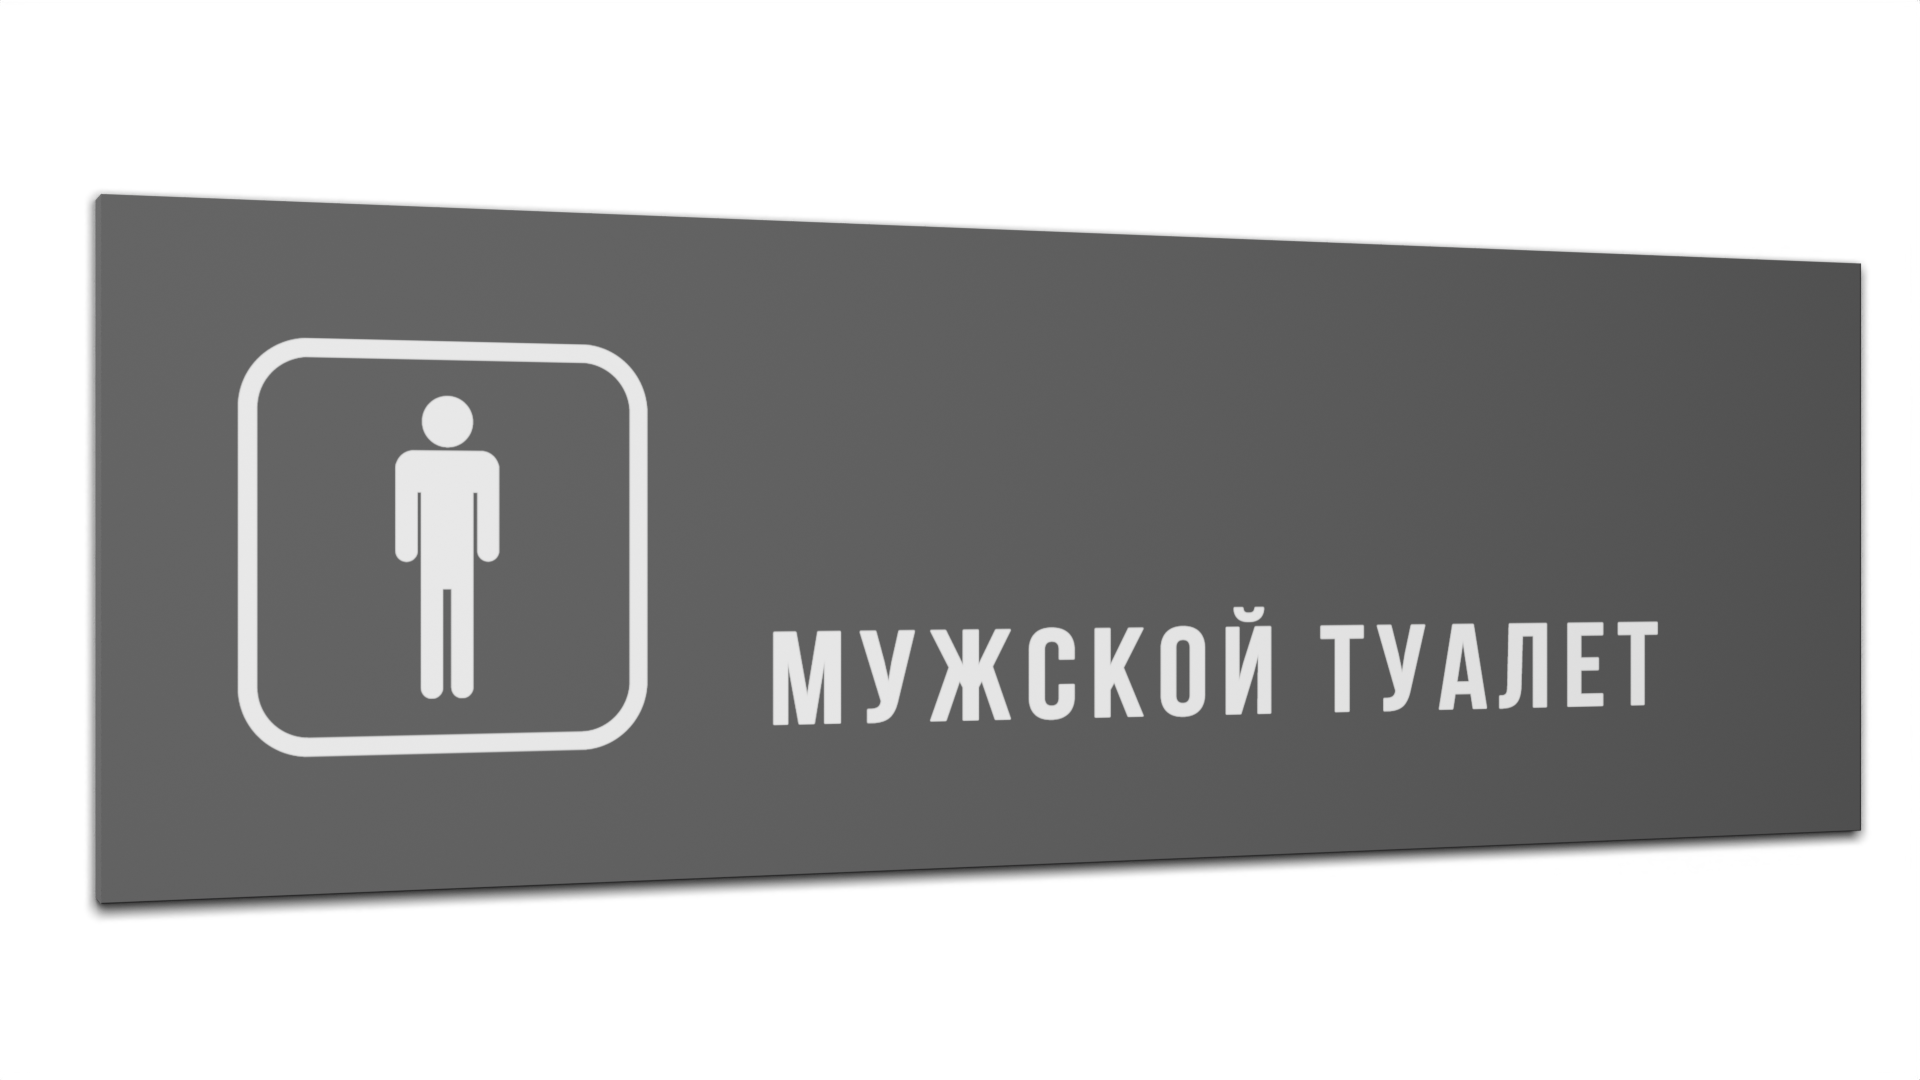 Табличка Мужской туалет, Серая матовая, 30 см х 10 см